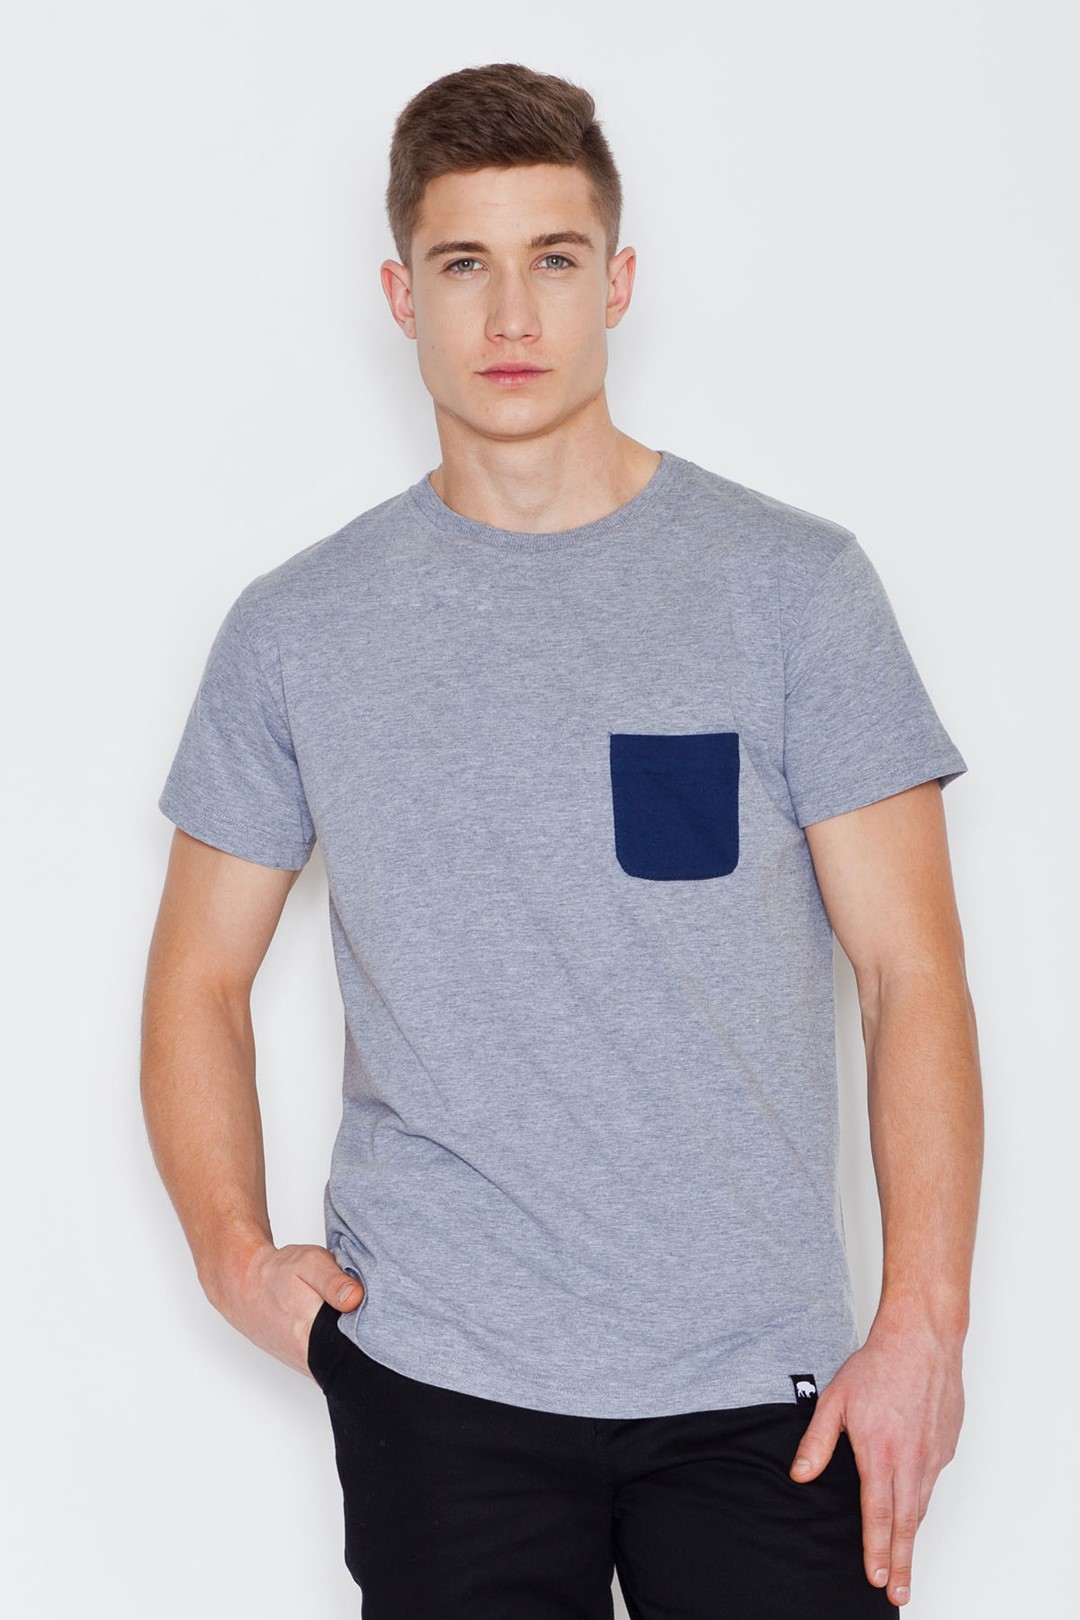 T-shirt V002 Grey XL